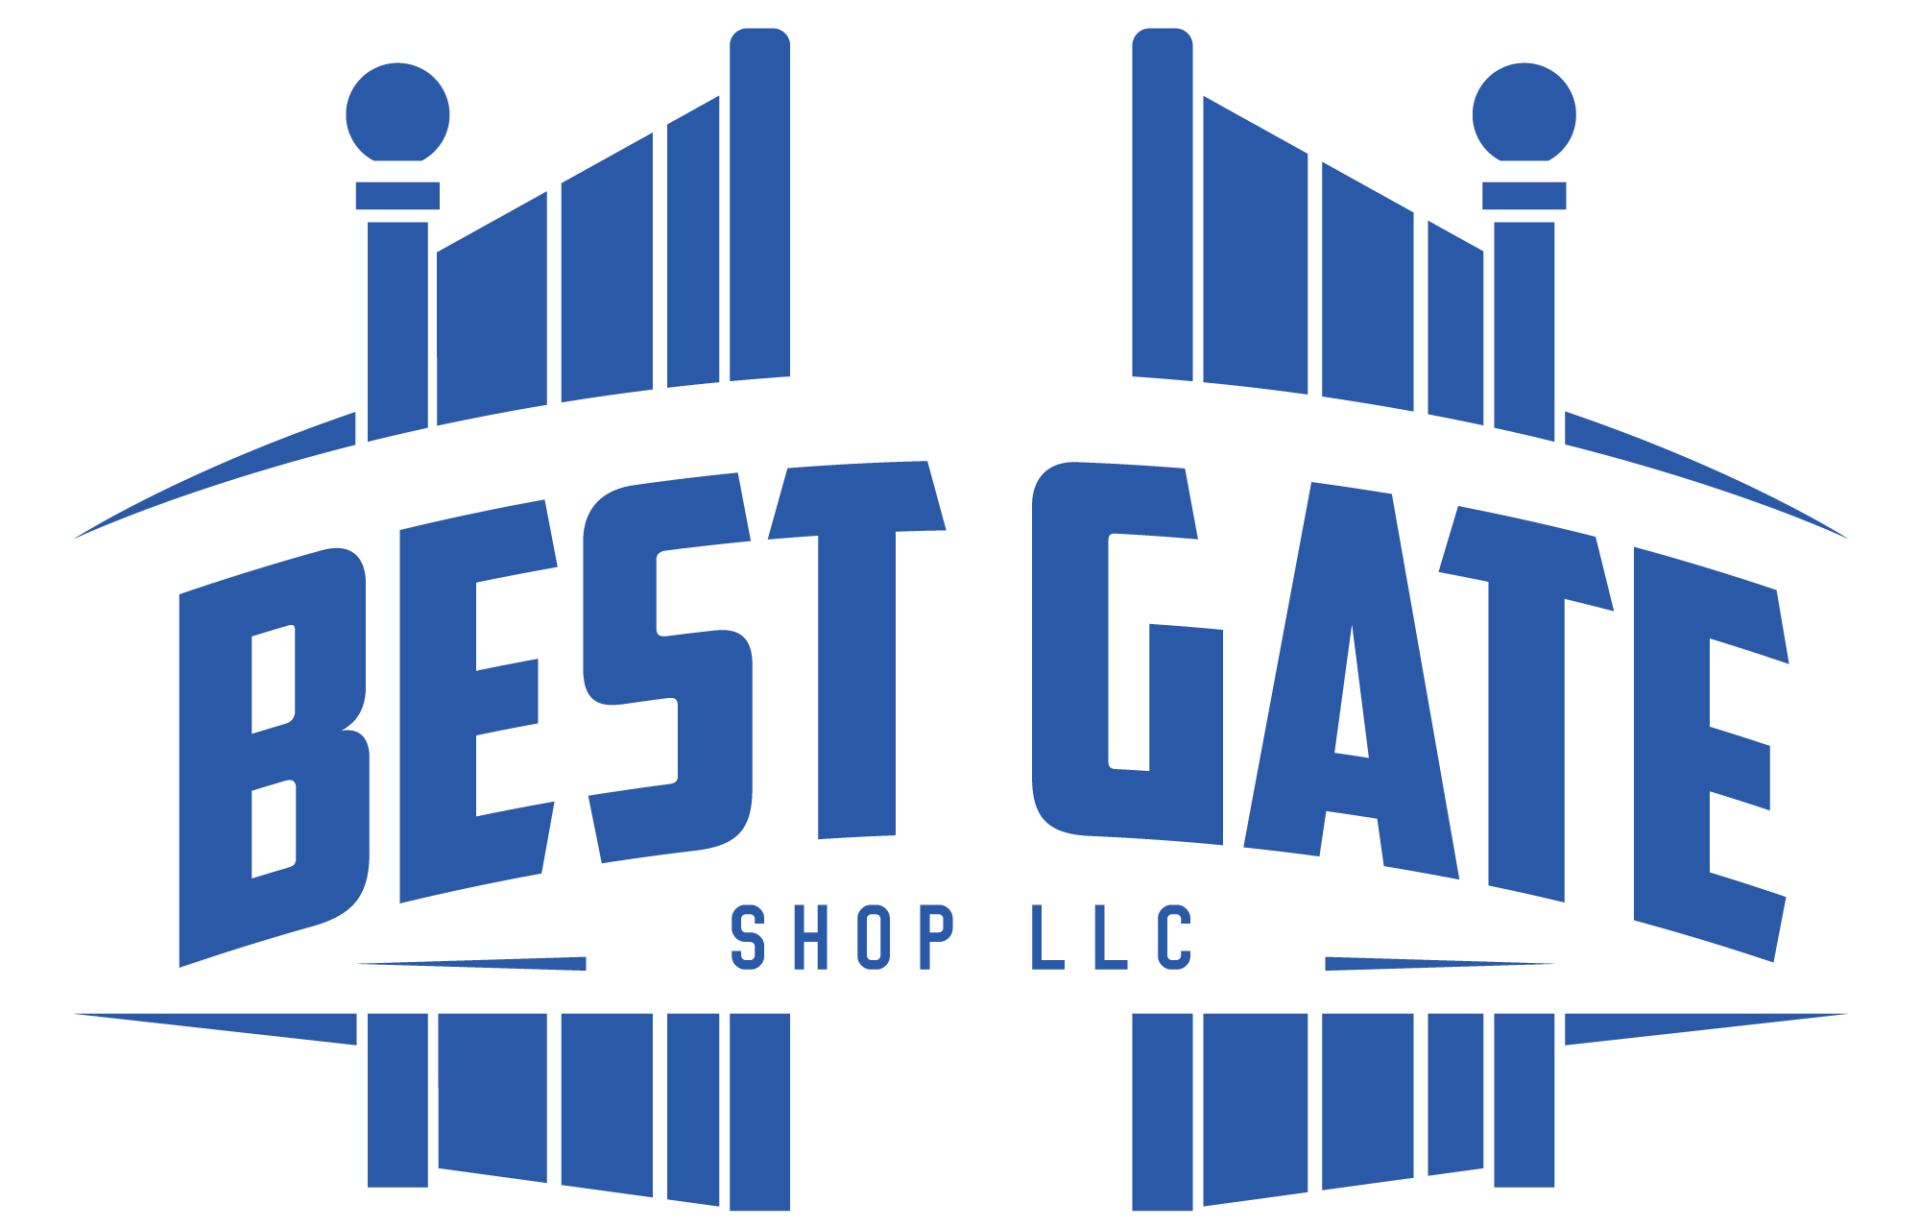 Best Gate Shop, LLC